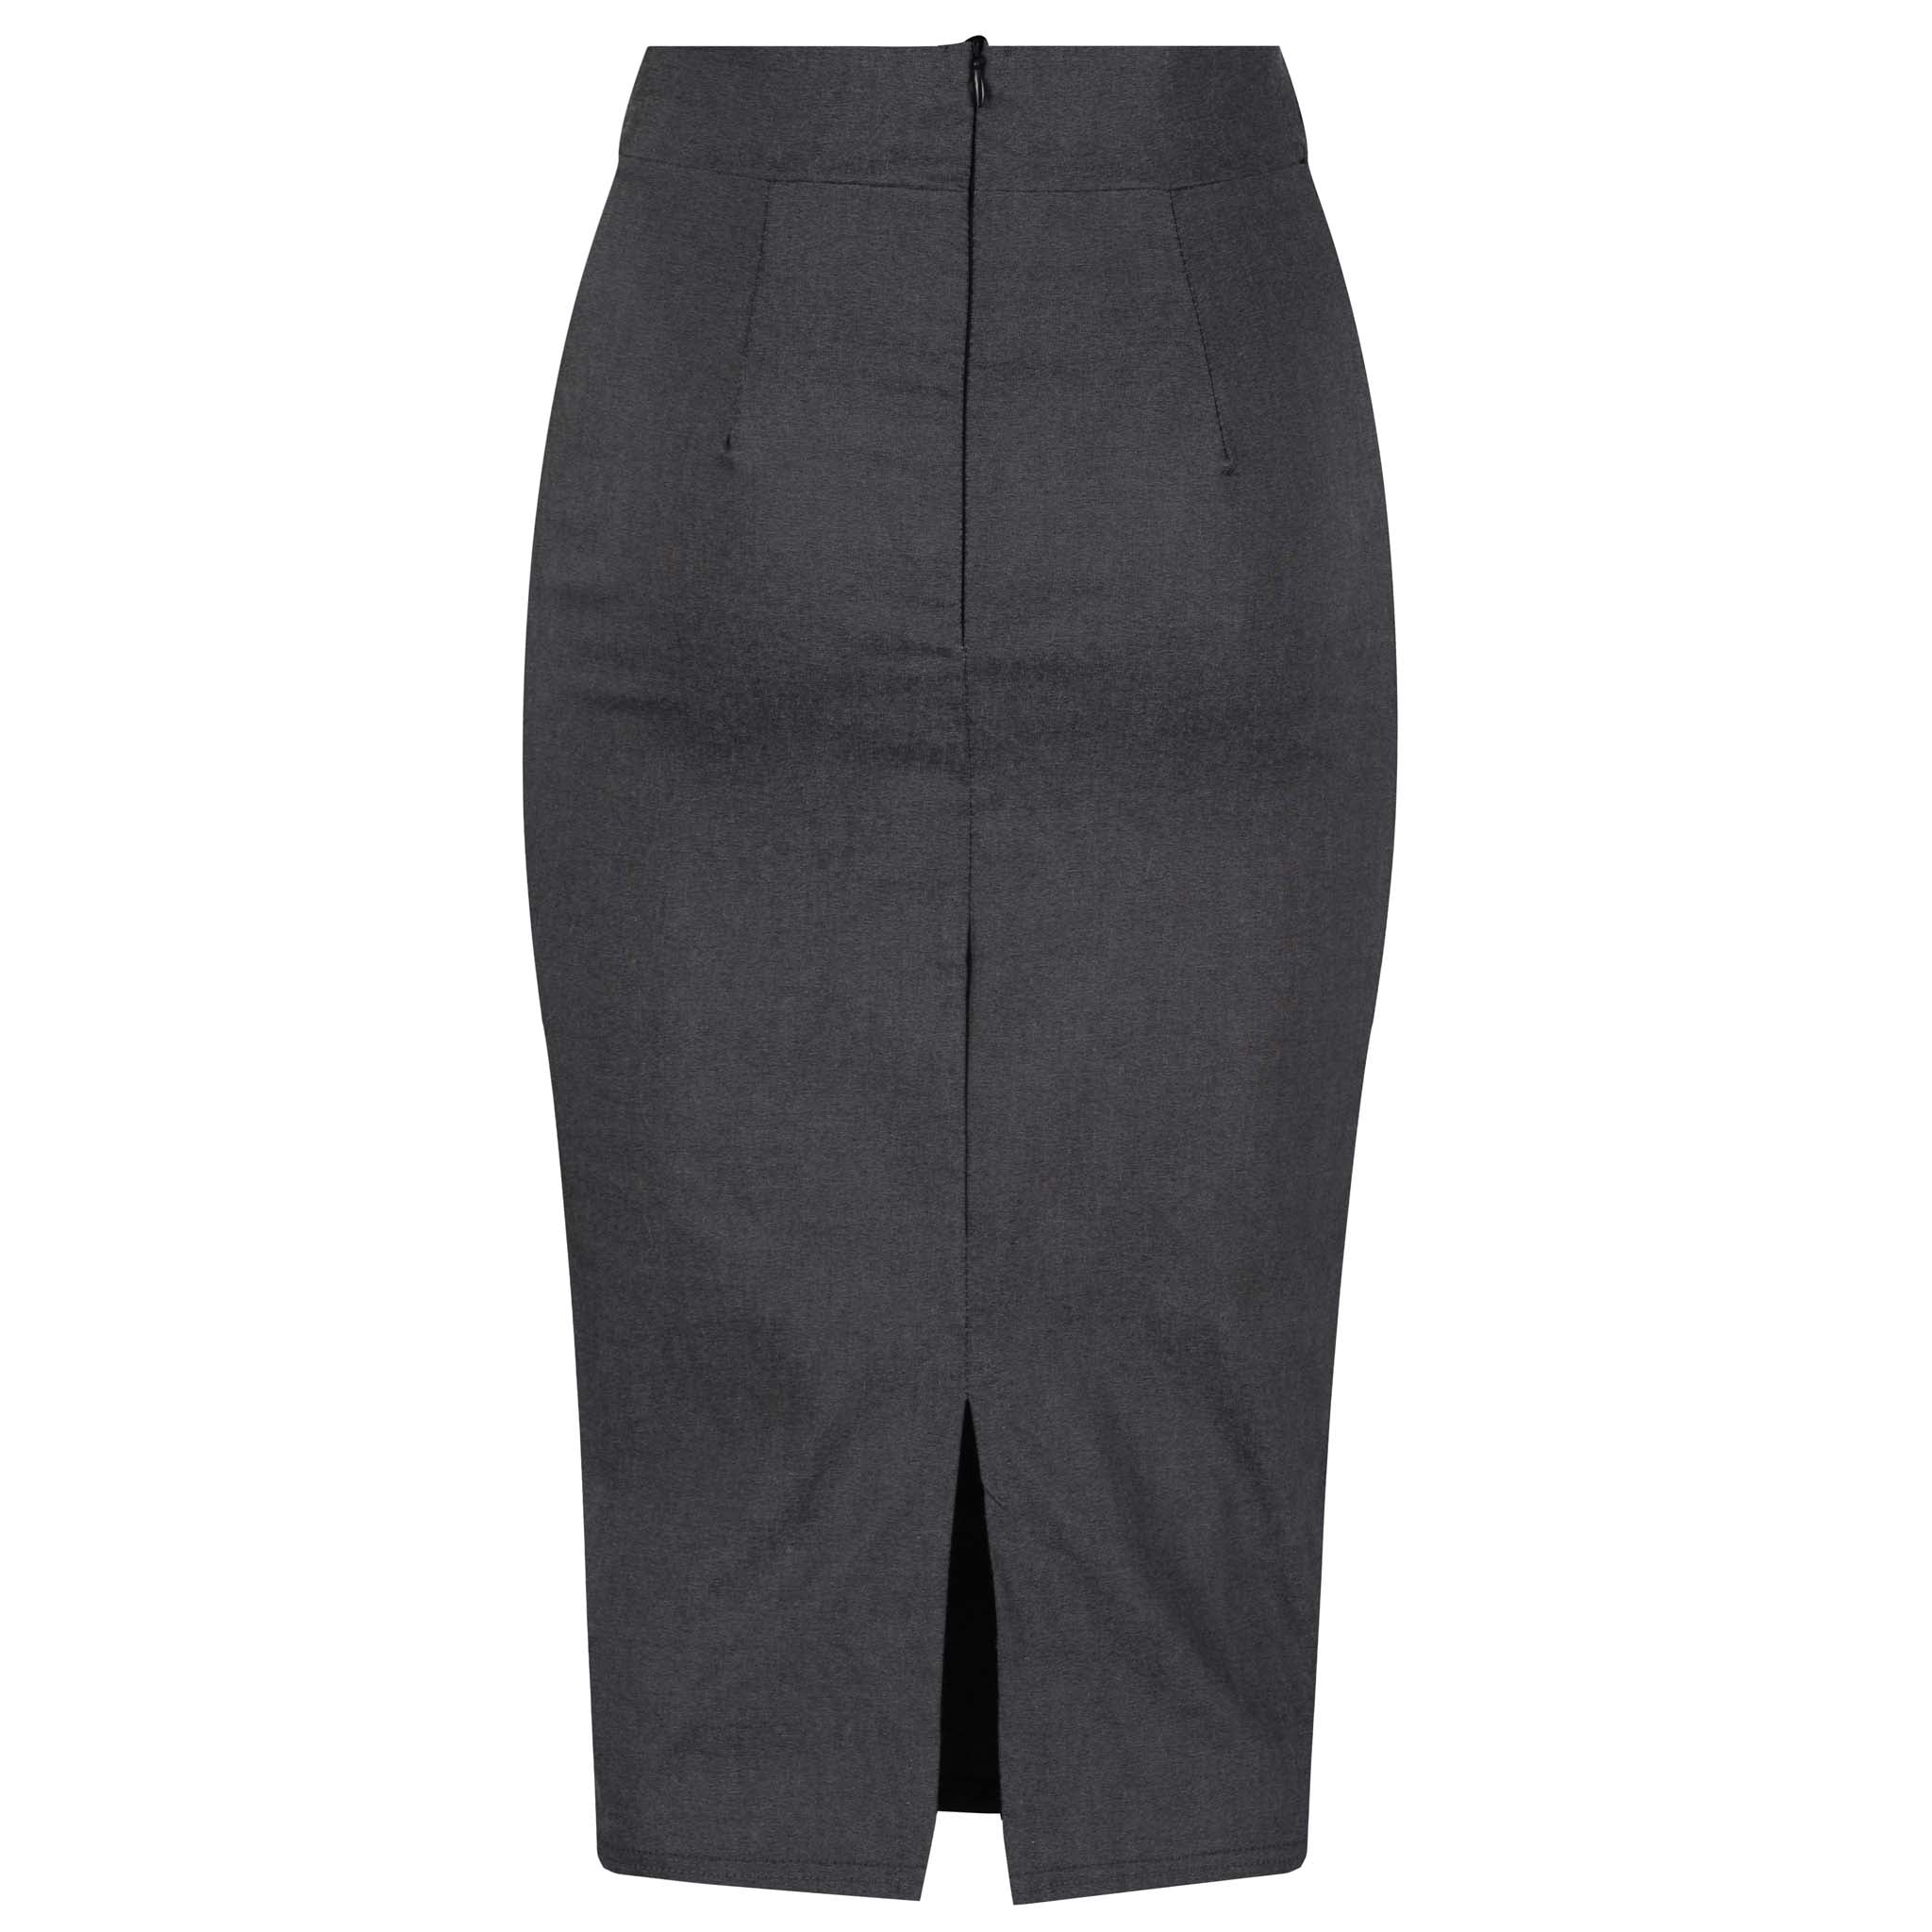 Grey 1940s Button Detail Bodycon Skirt